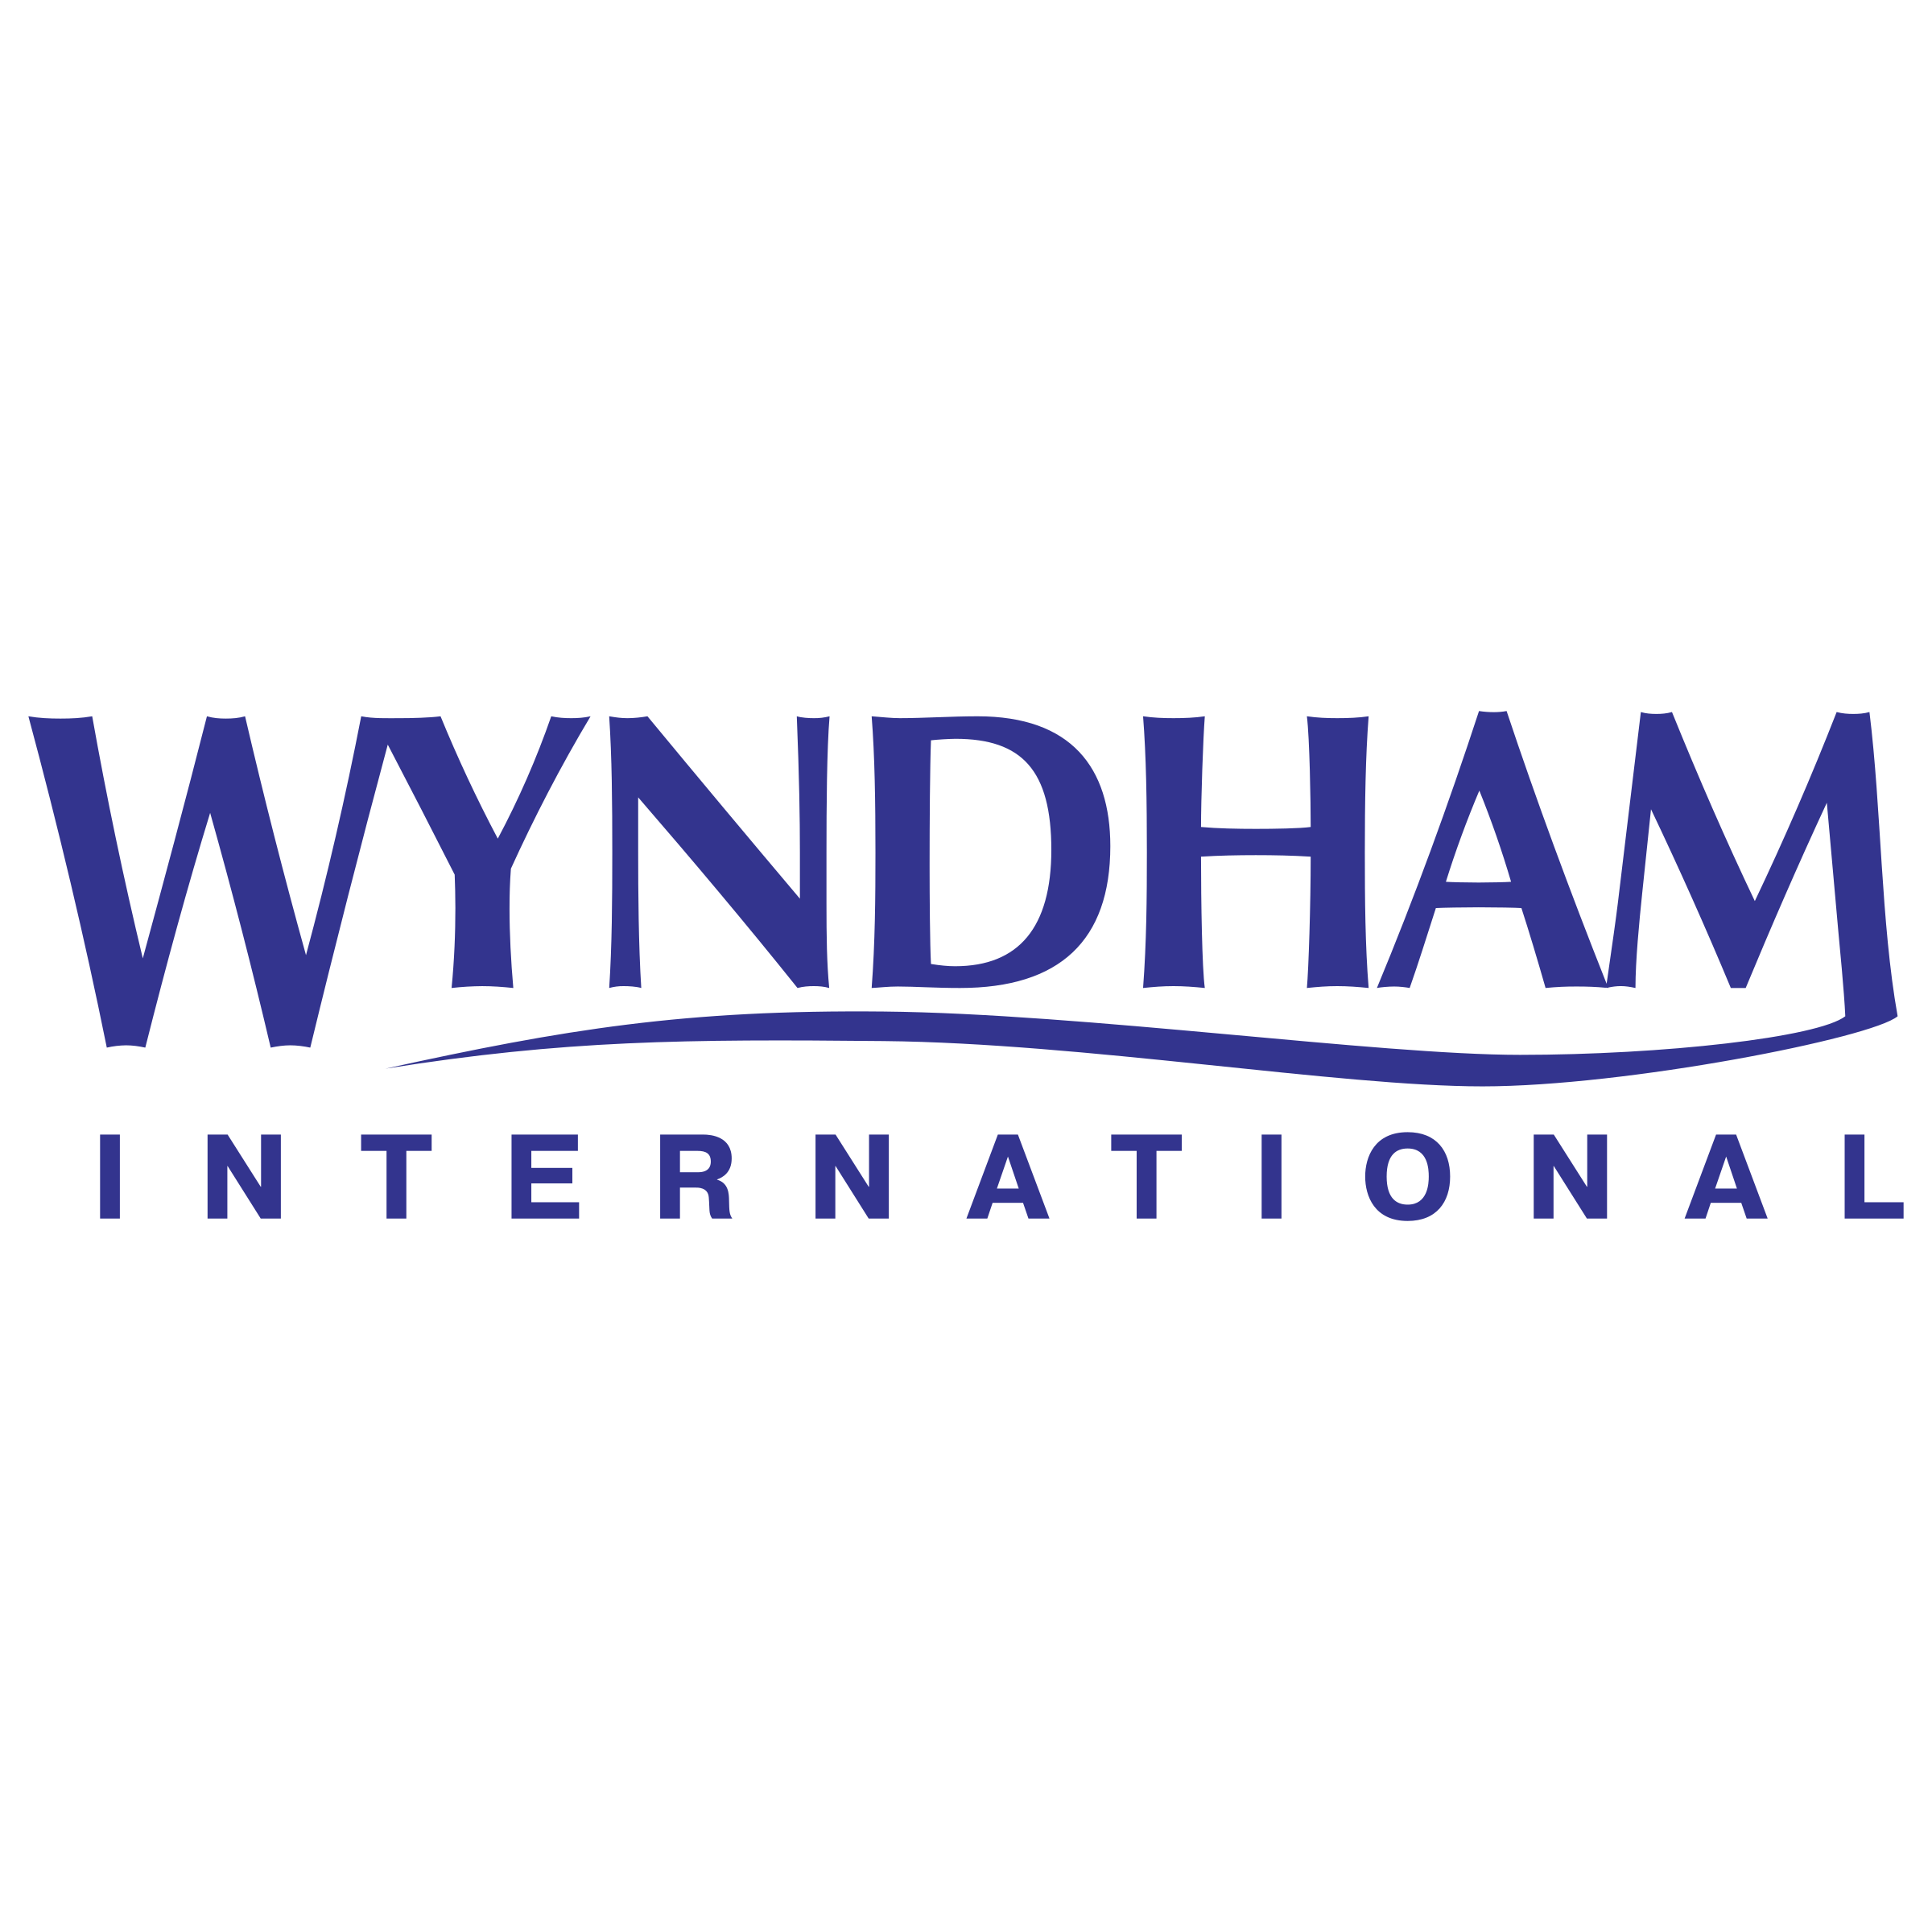 wyndham-logo-png-transparent copy.png